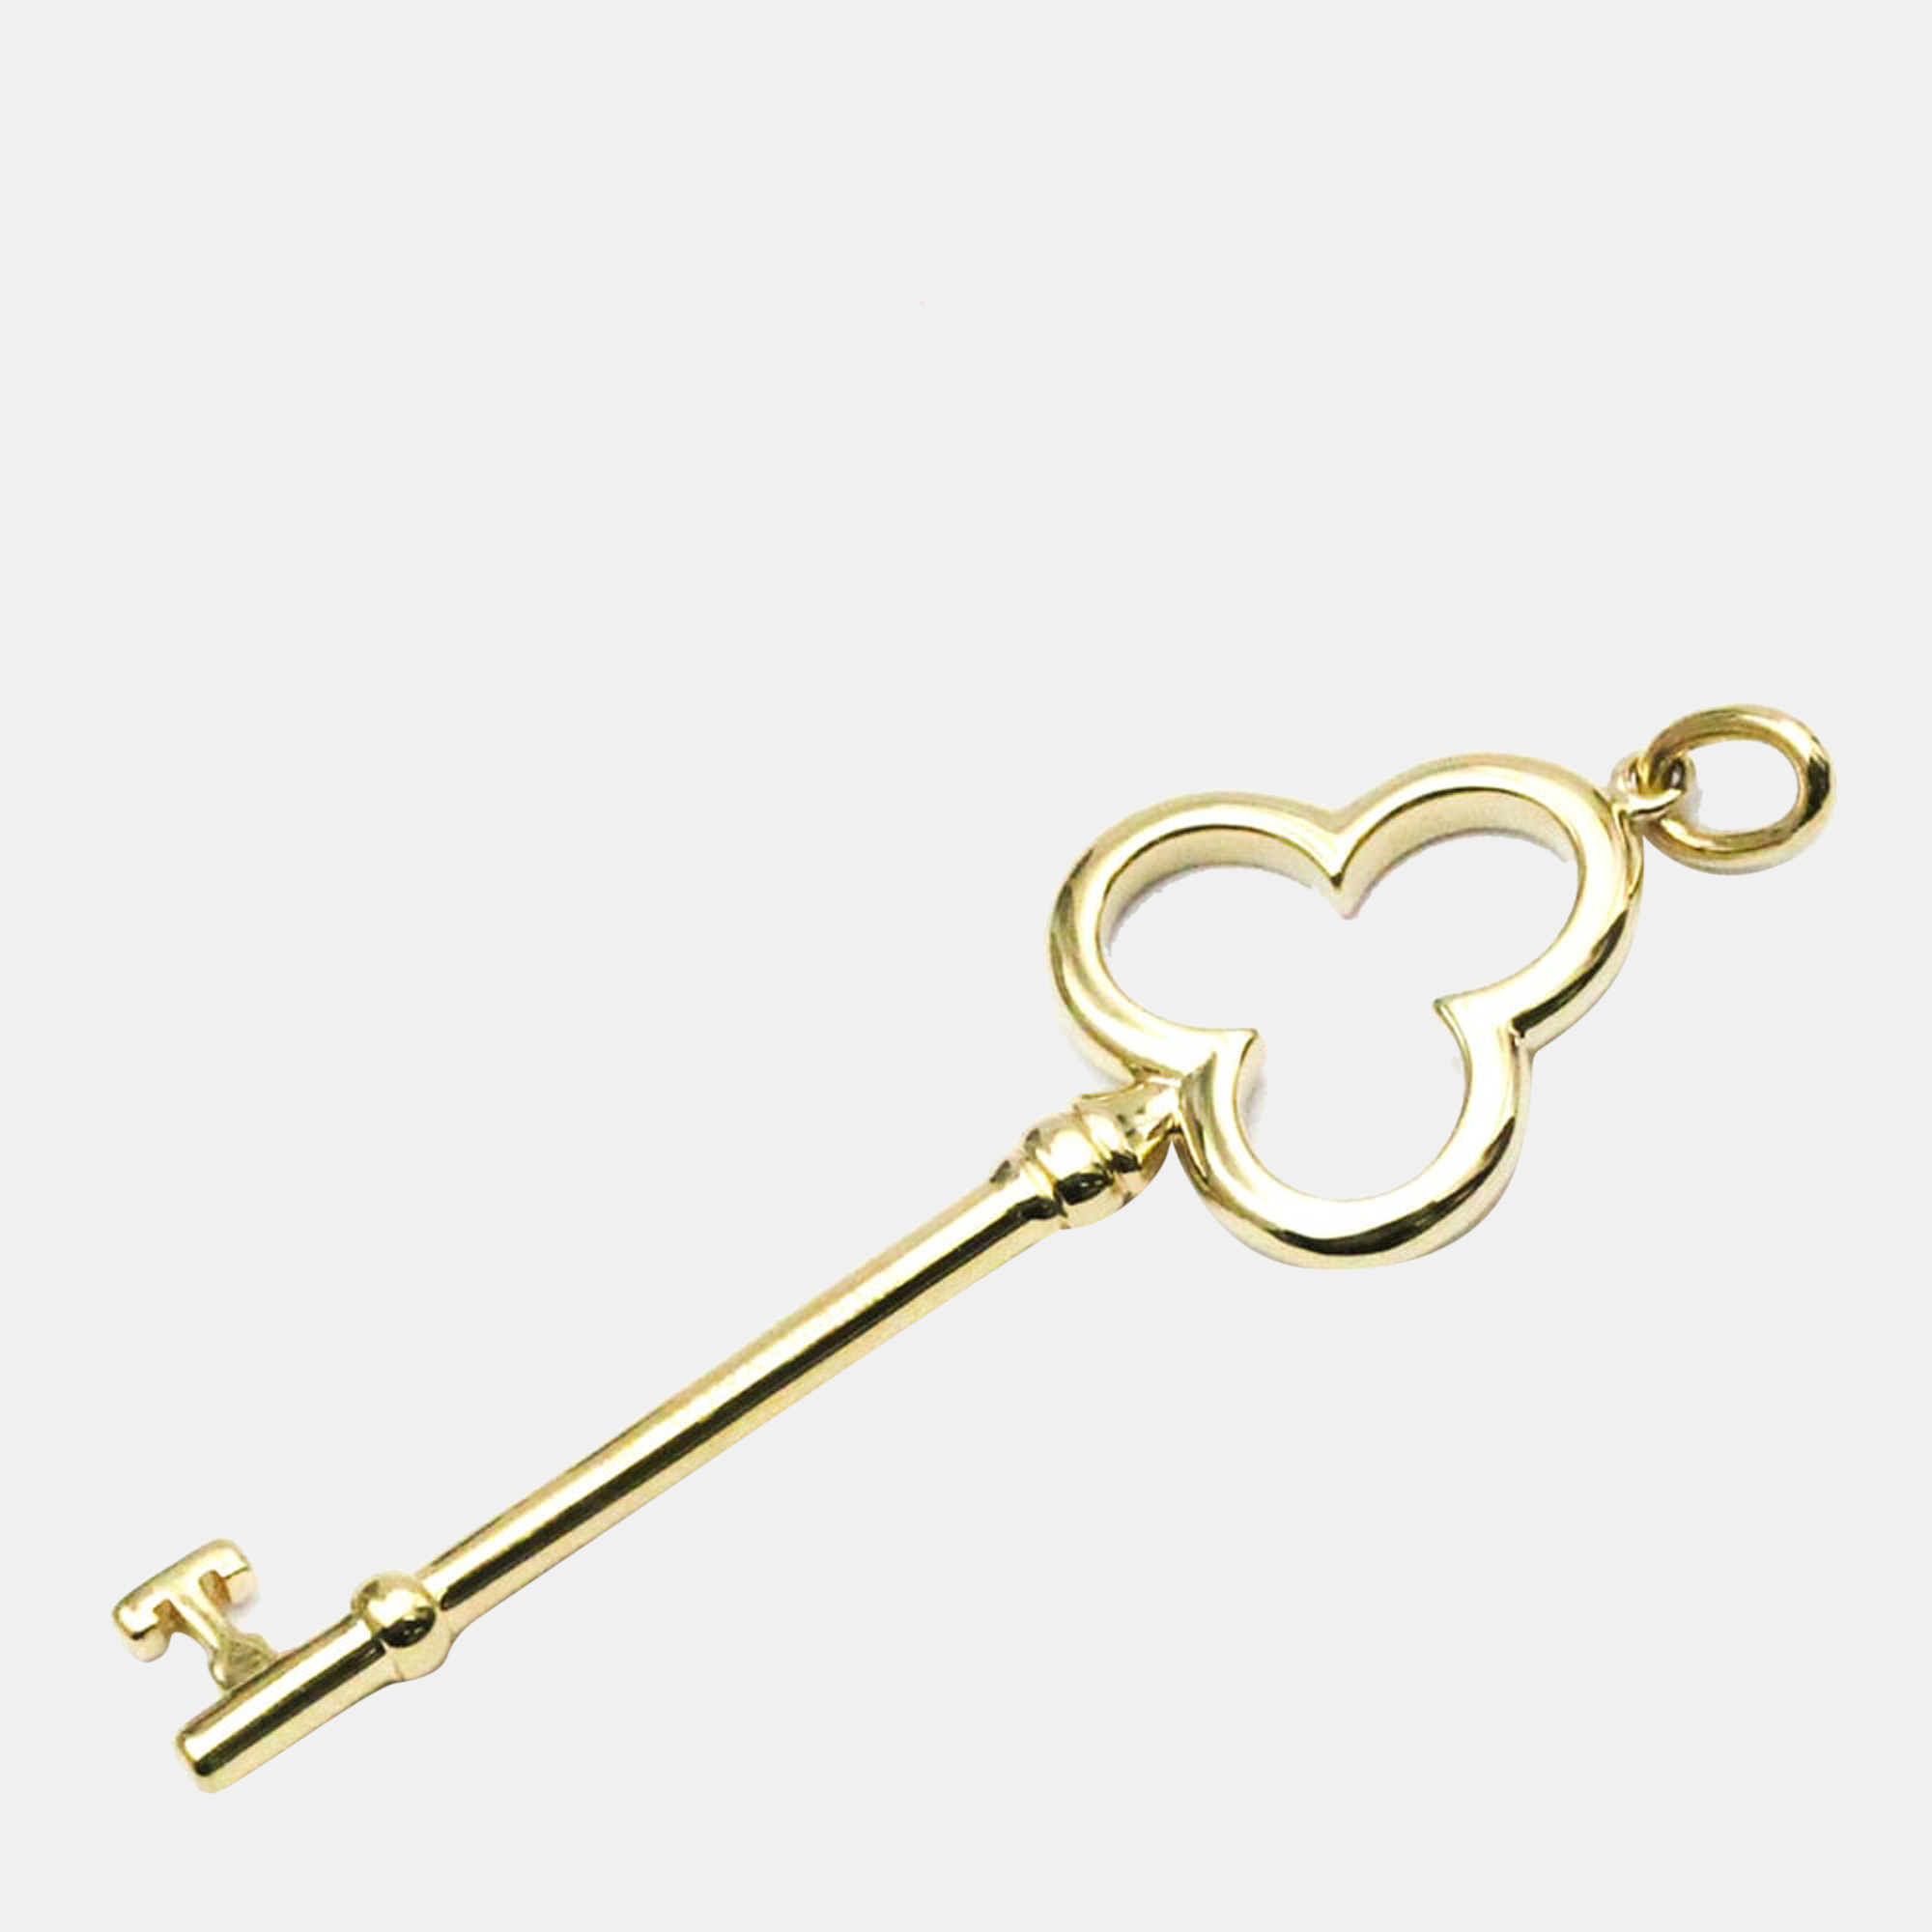 Tiffany & co. tiffany keys 18k yellow gold charms and pendants